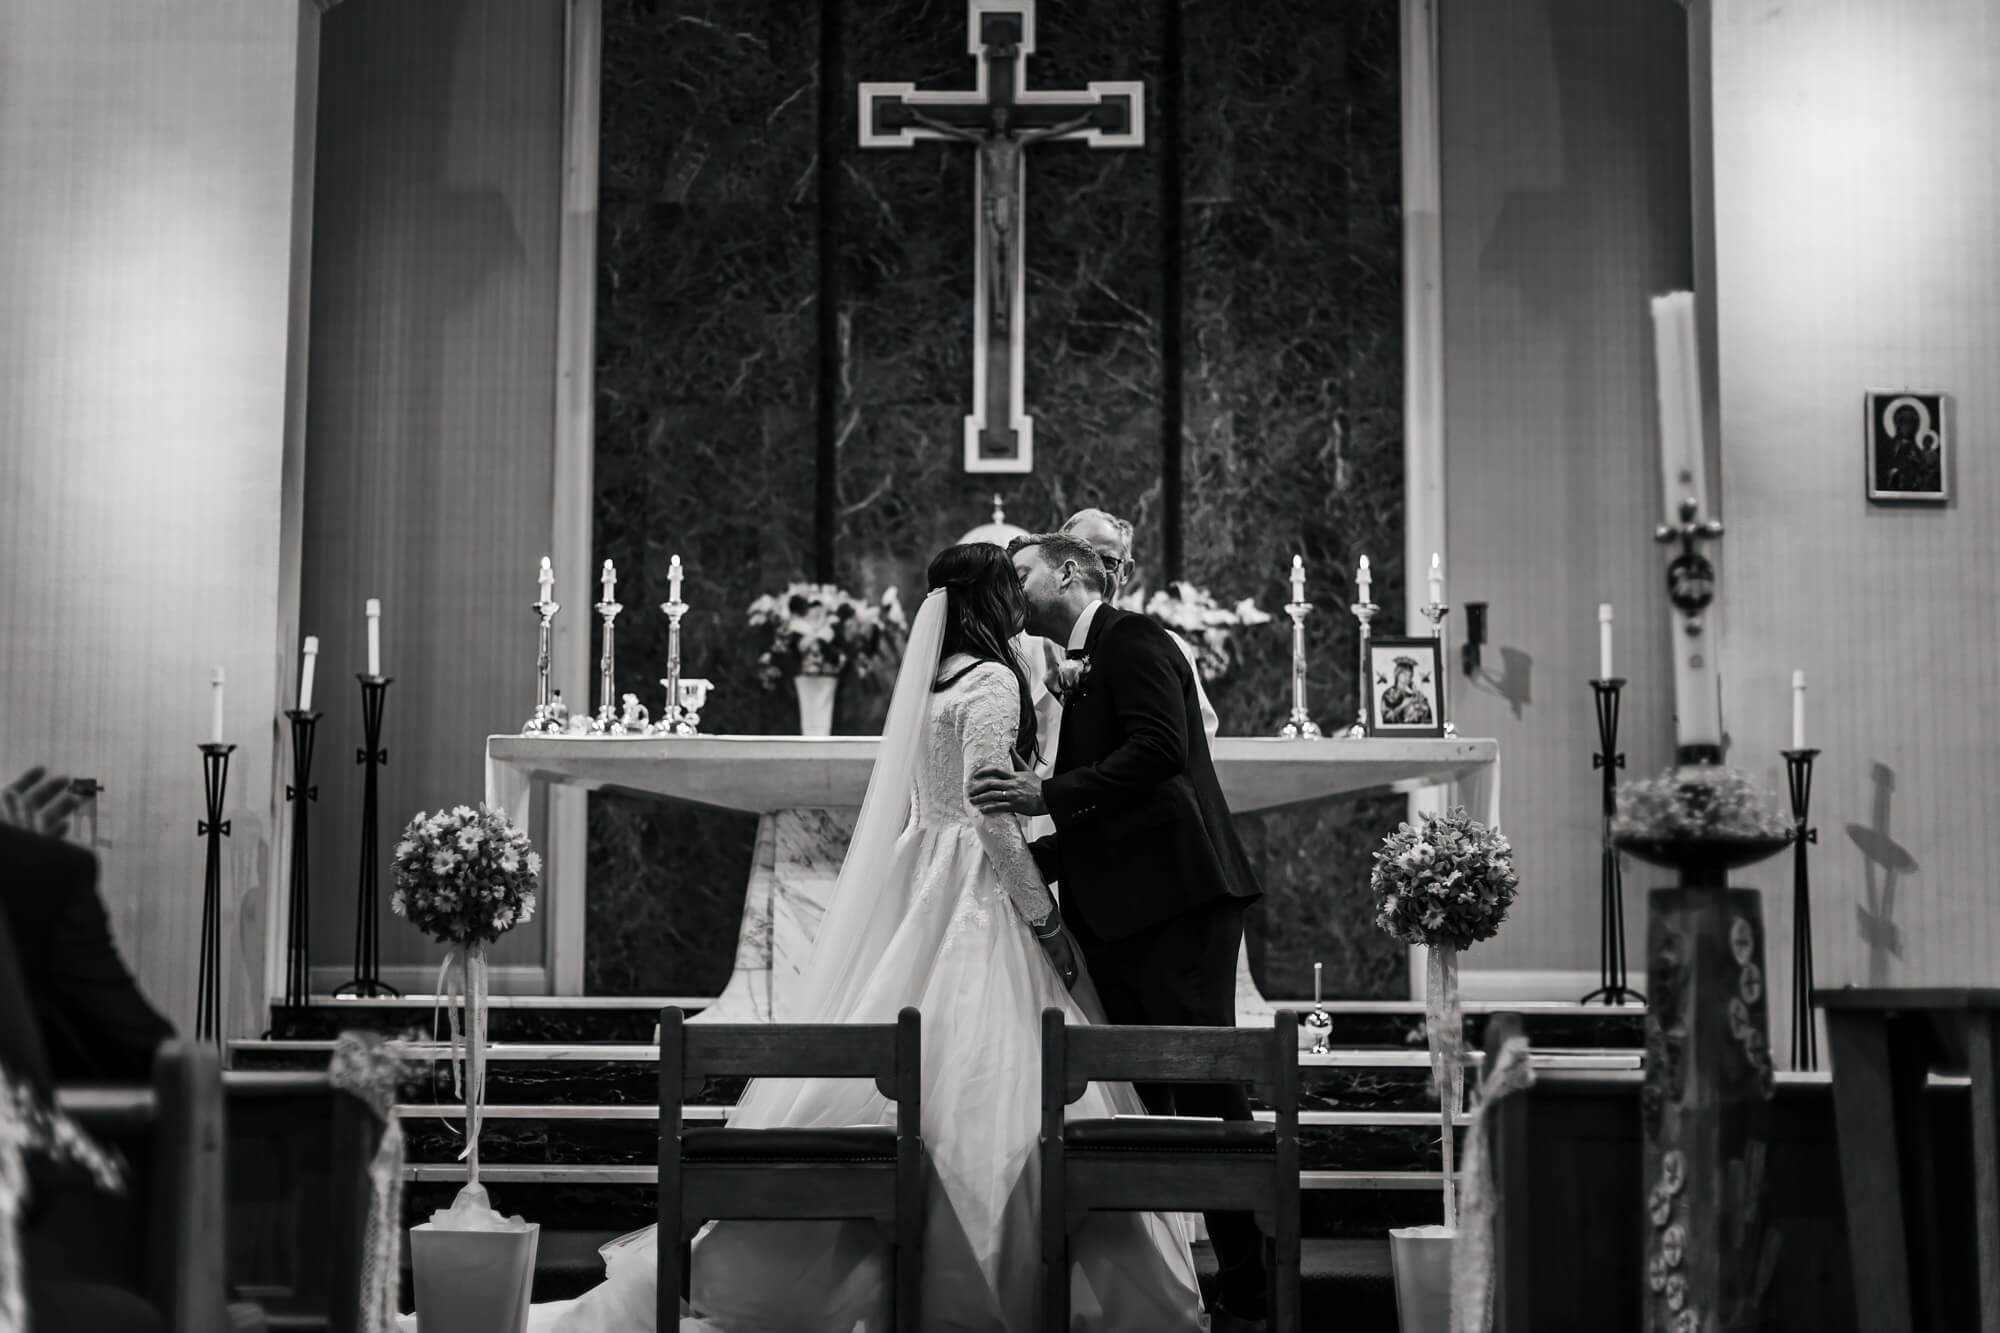 First kiss at a wedding at the church altar